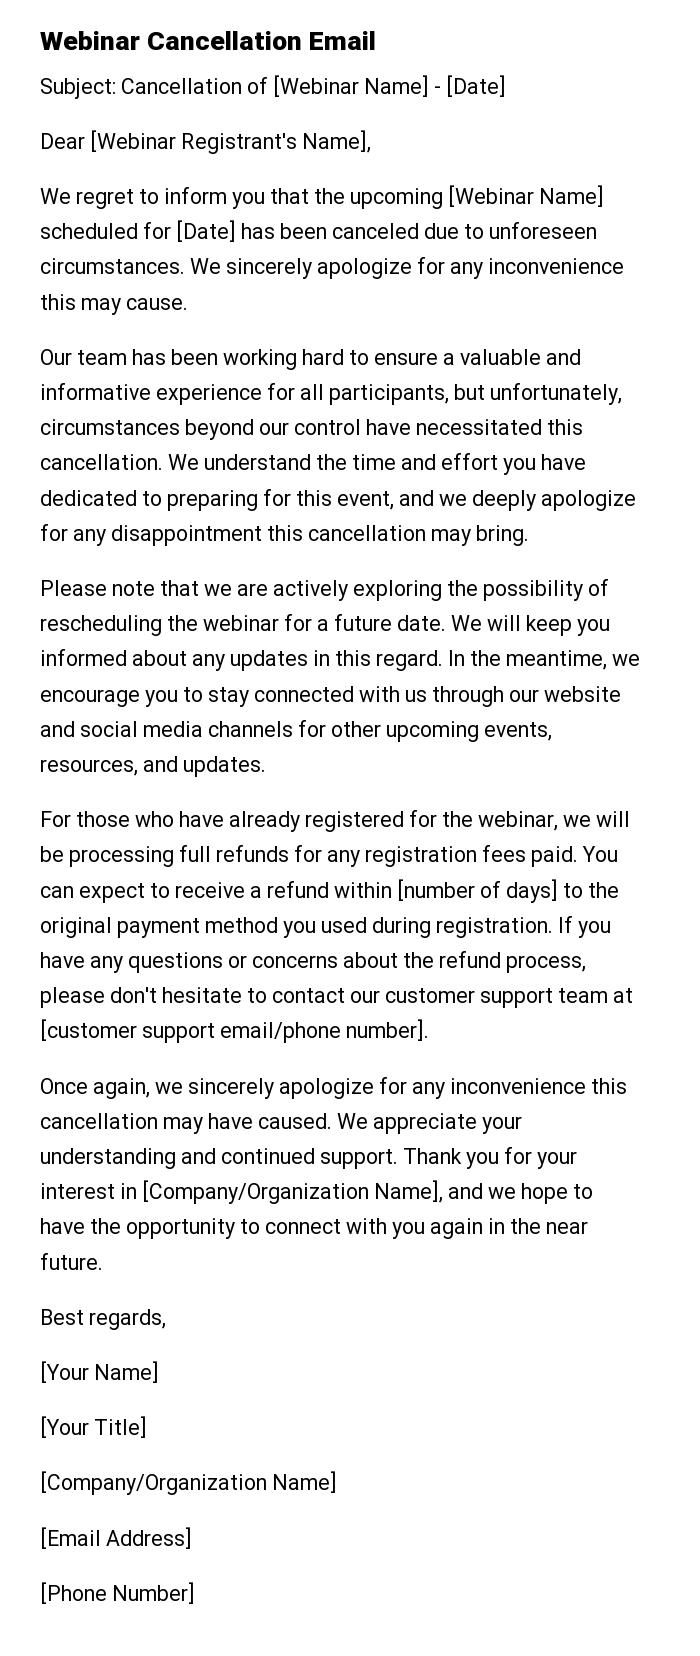 Webinar Cancellation Email